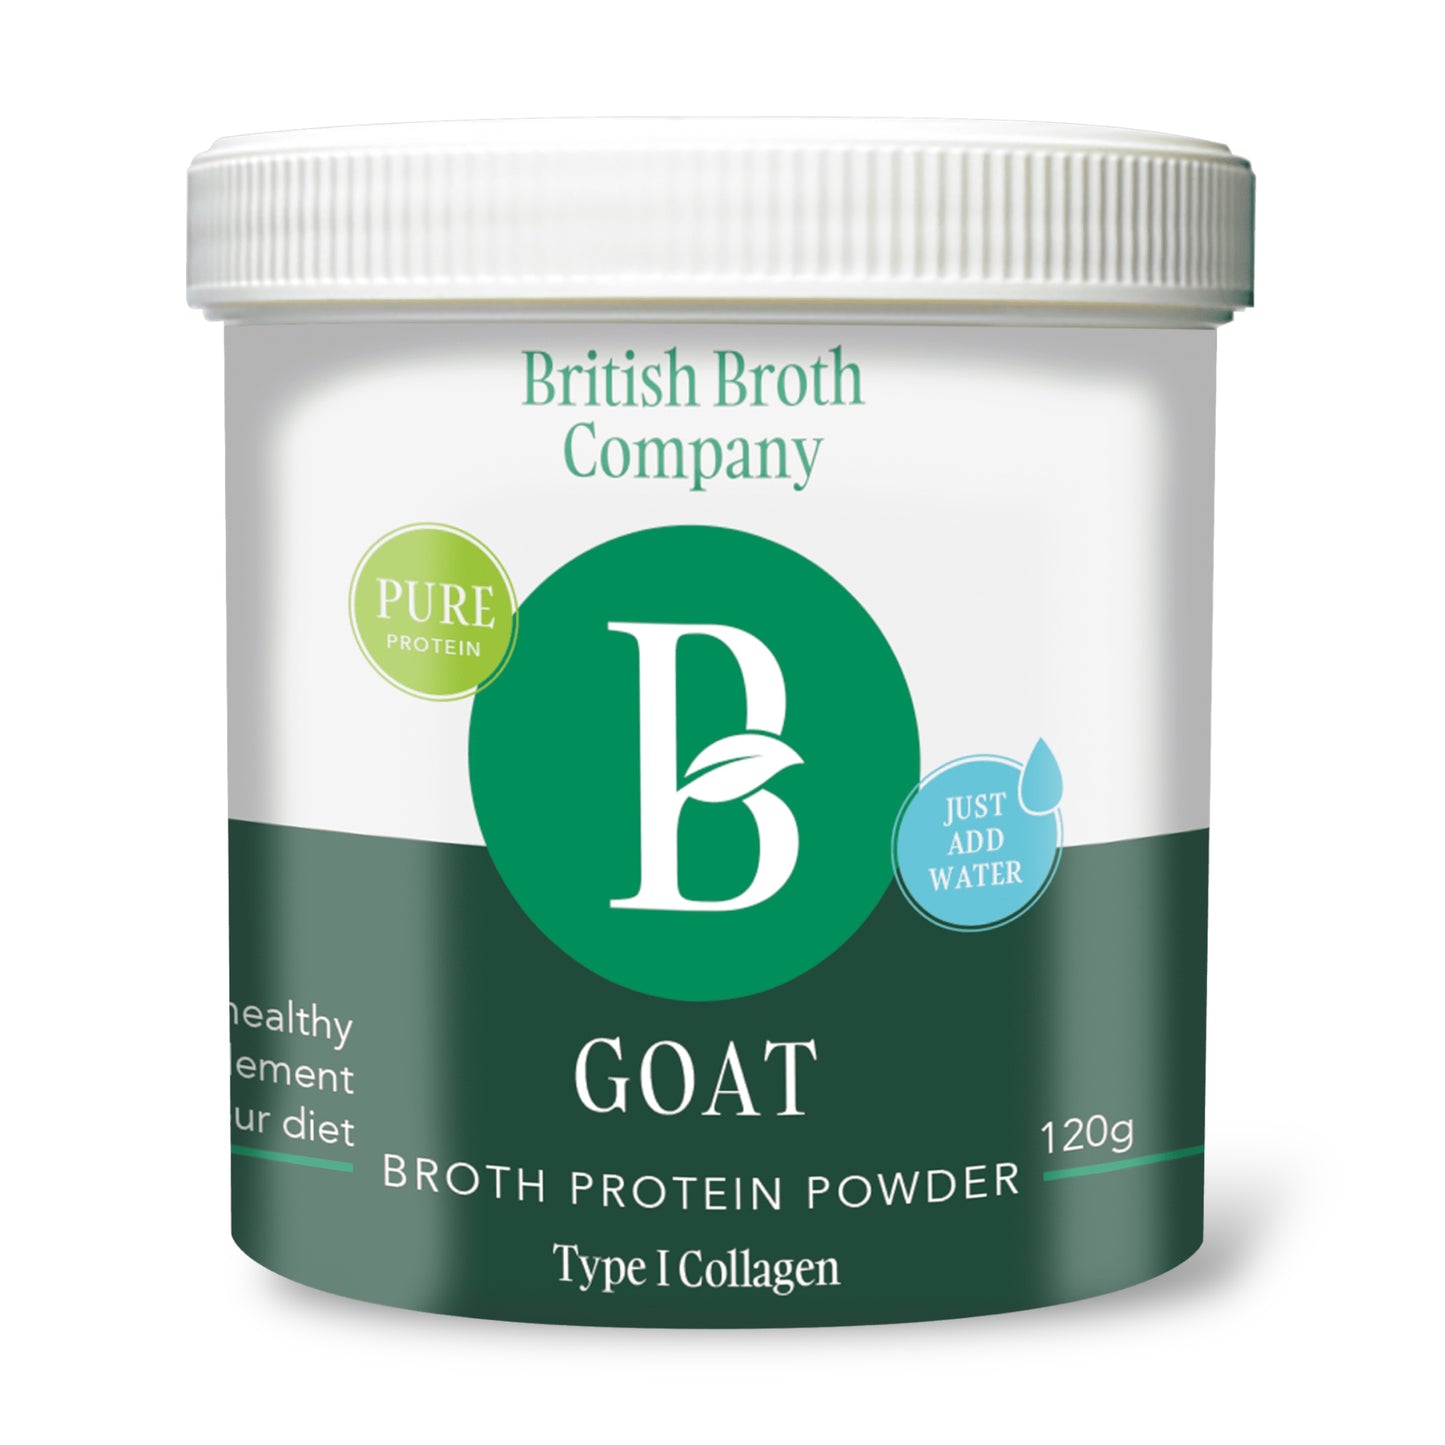 British broth company goat bone protein powder